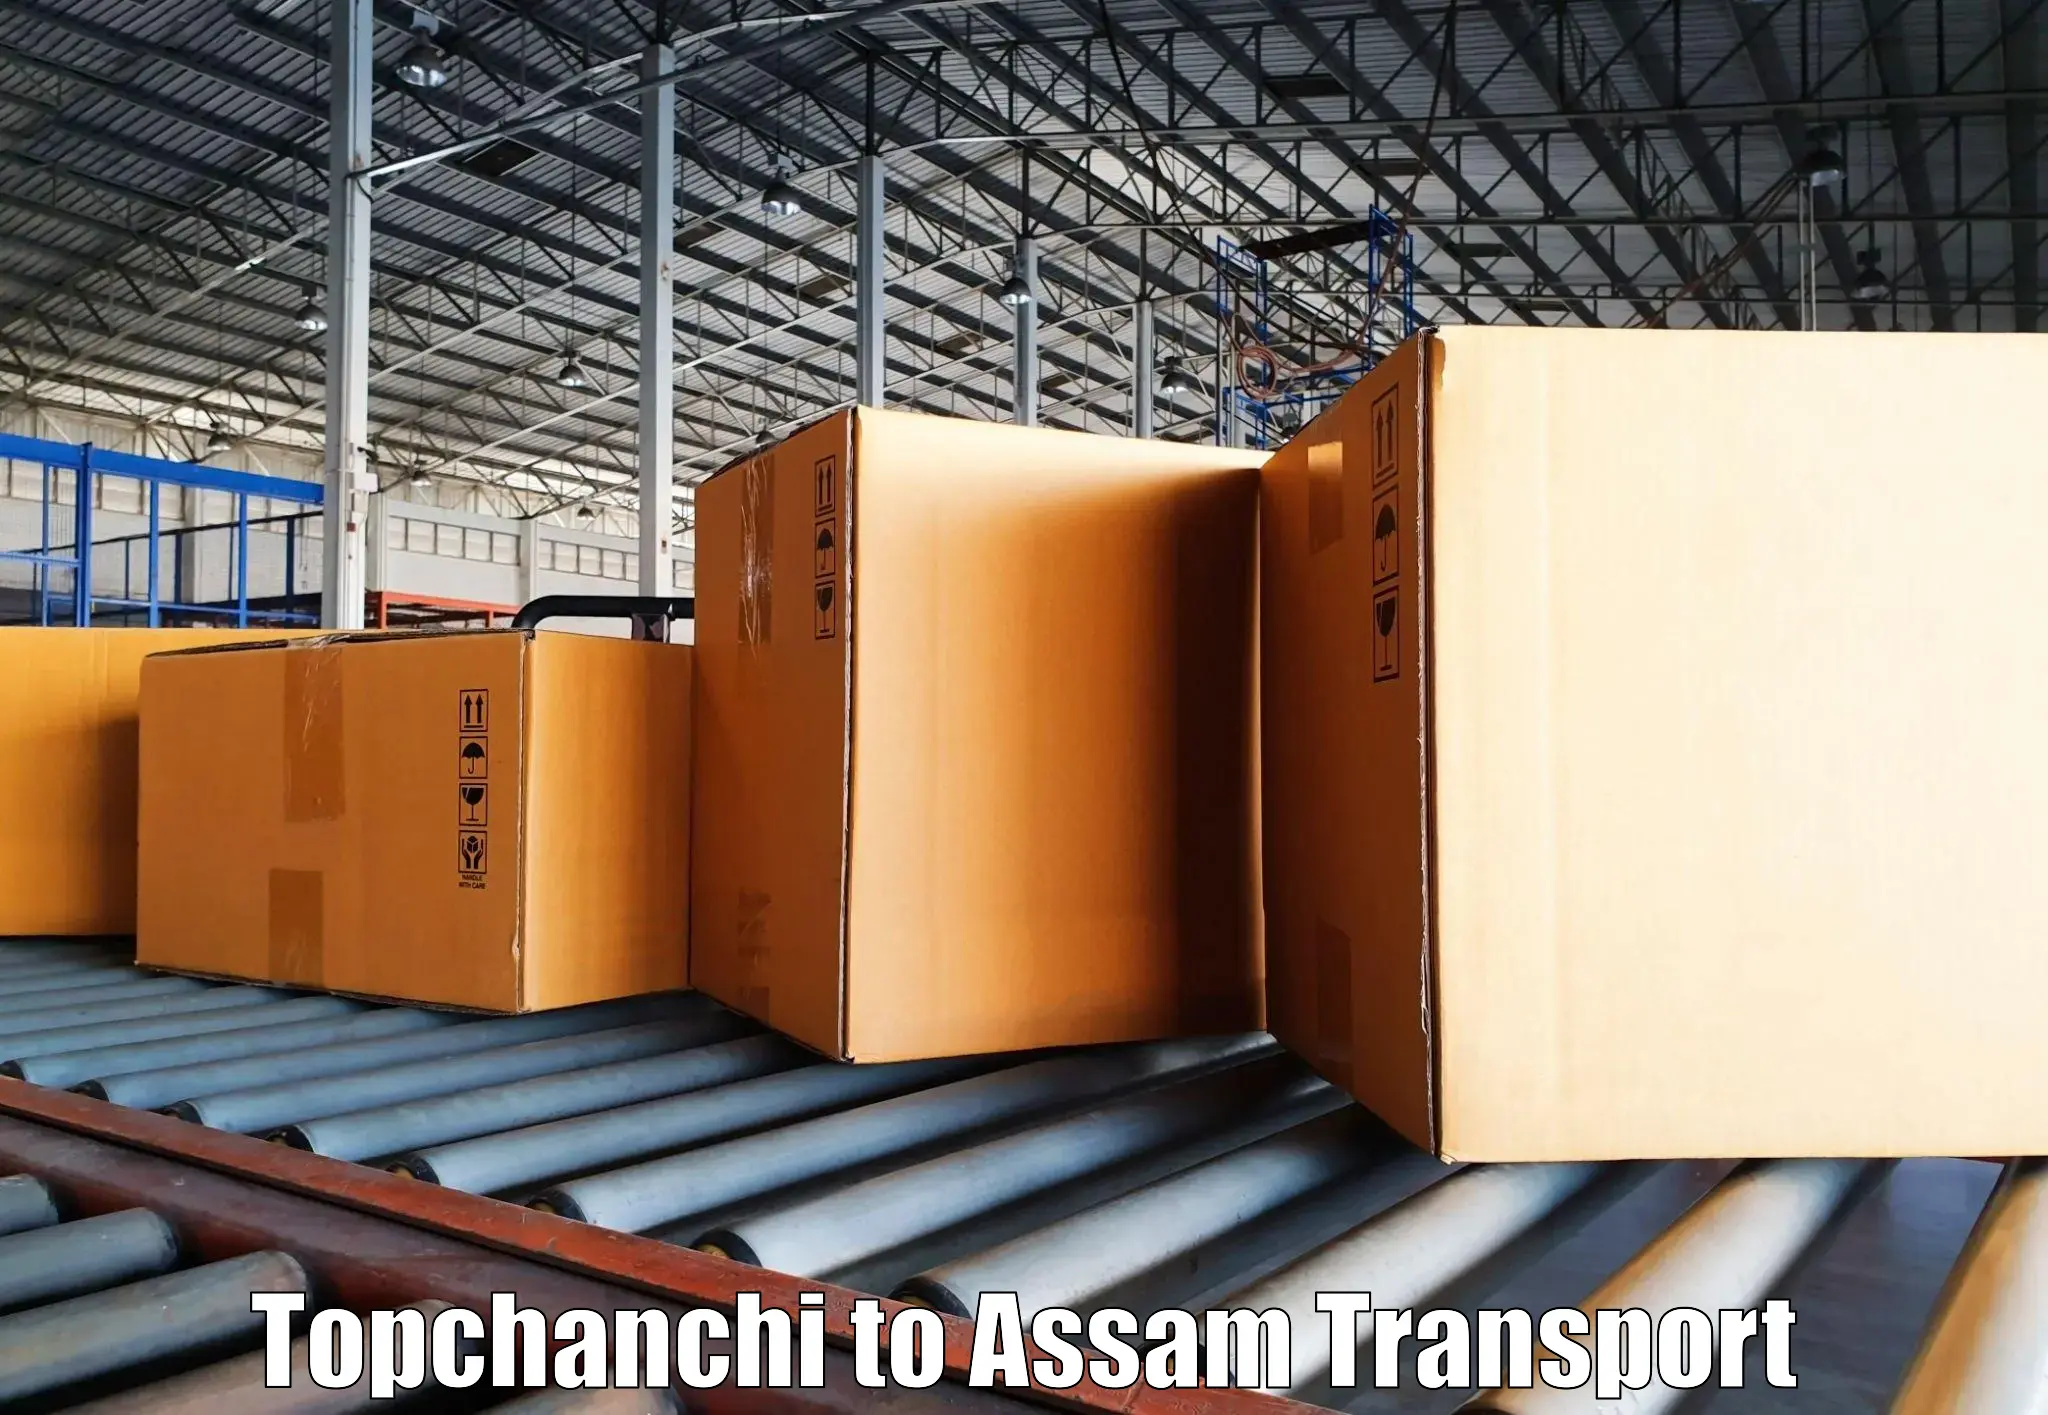 Bike shipping service Topchanchi to Assam